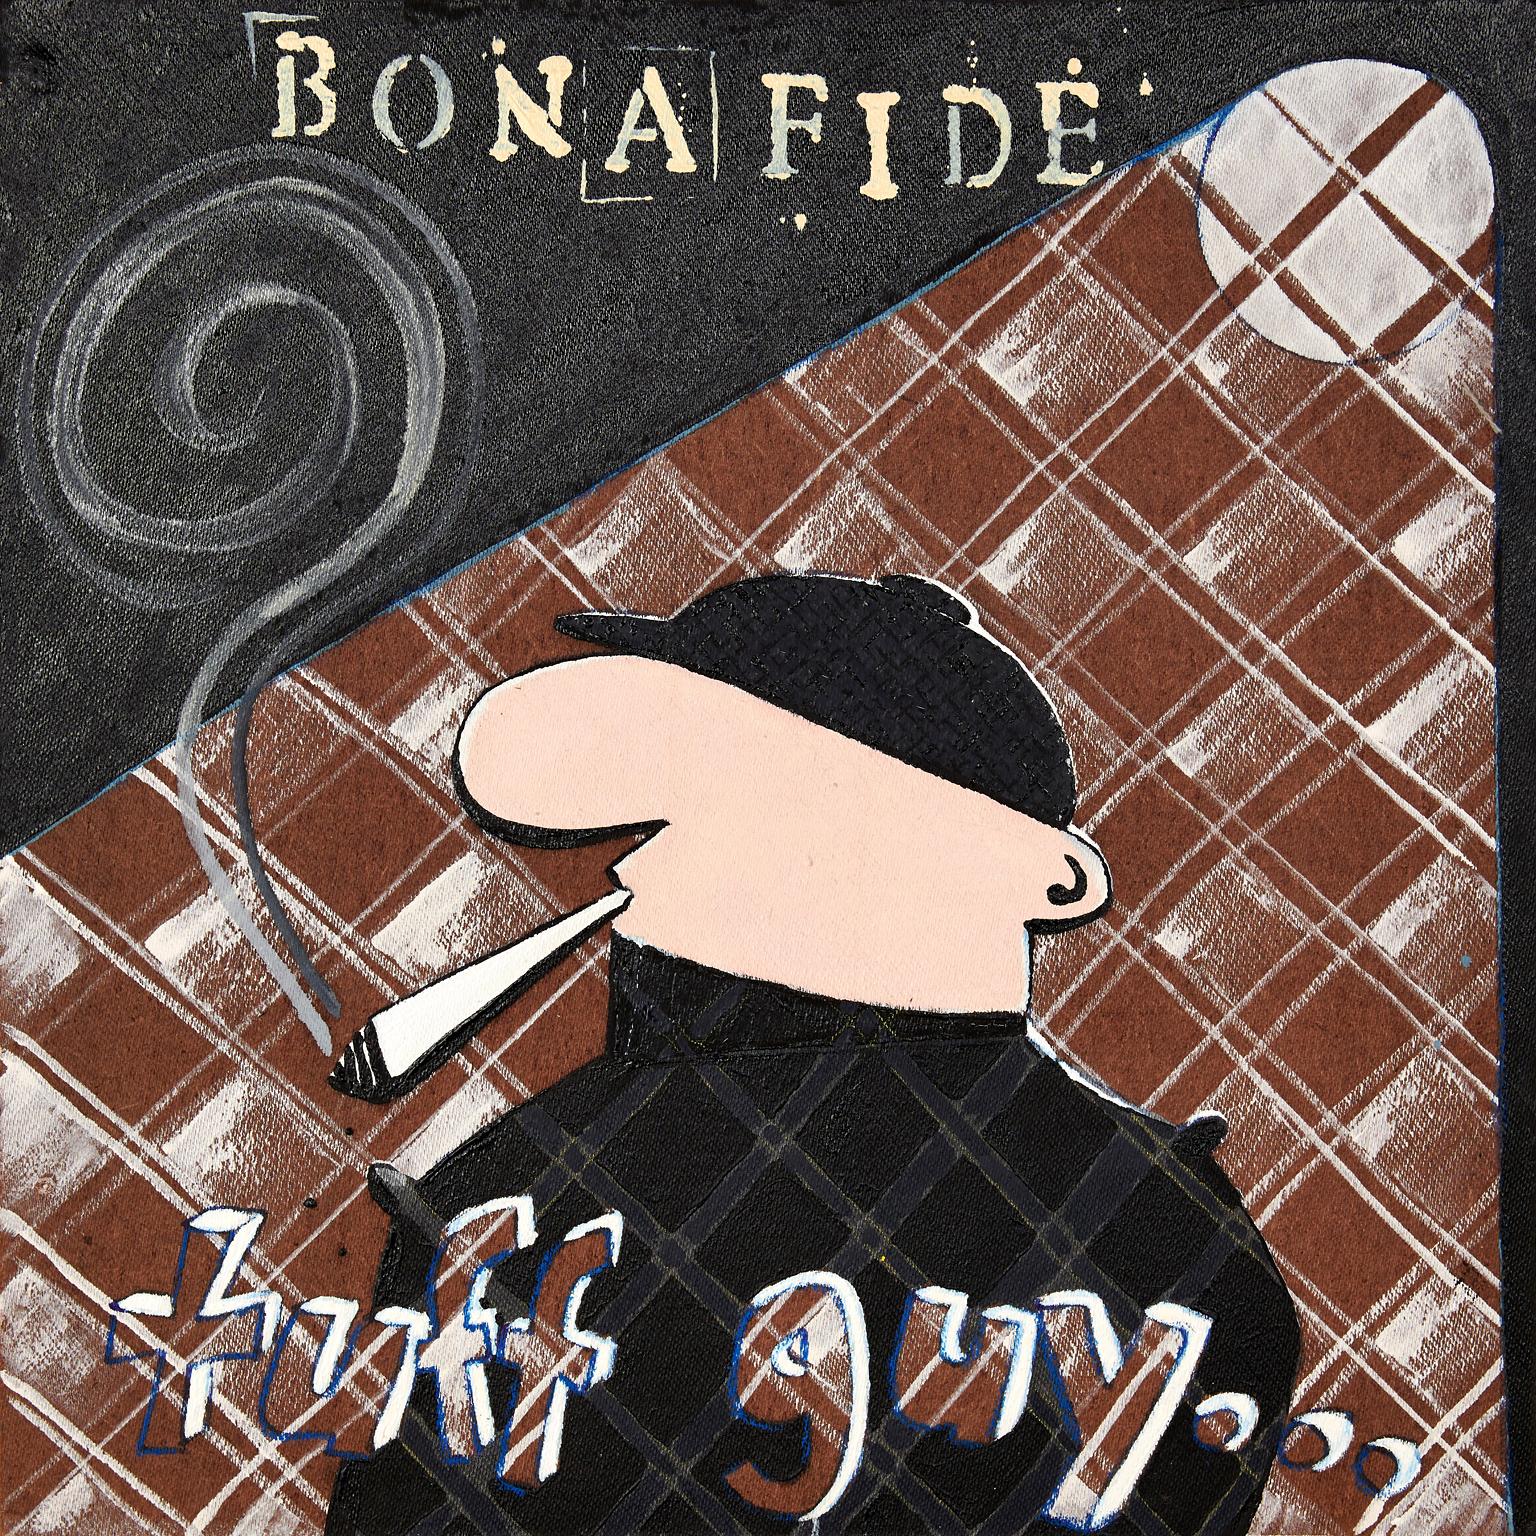 "Bonafide Tuff Guy" Acrylic Painting by David Craig Ellis, Urban Street Art